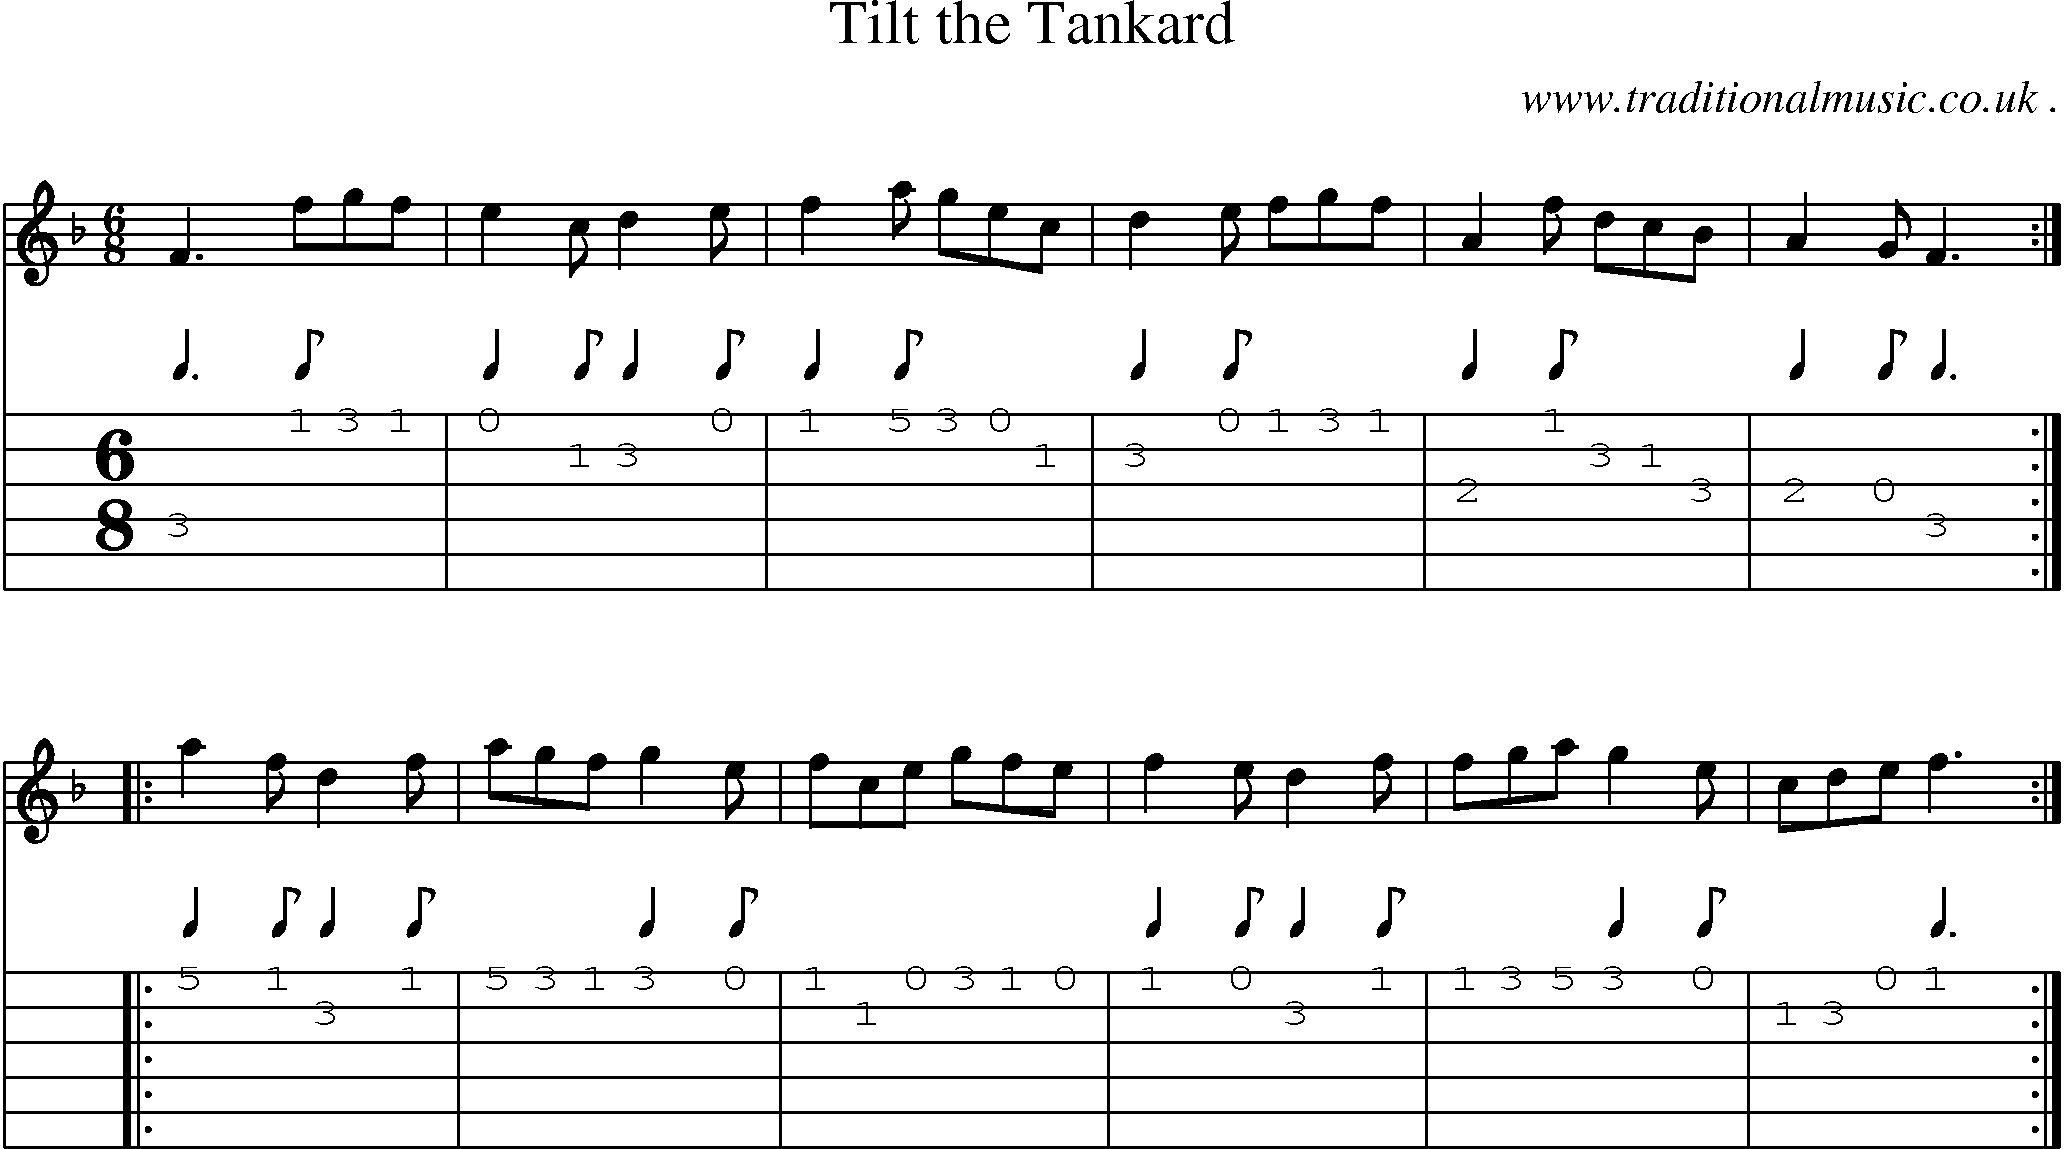 Sheet-Music and Guitar Tabs for Tilt The Tankard